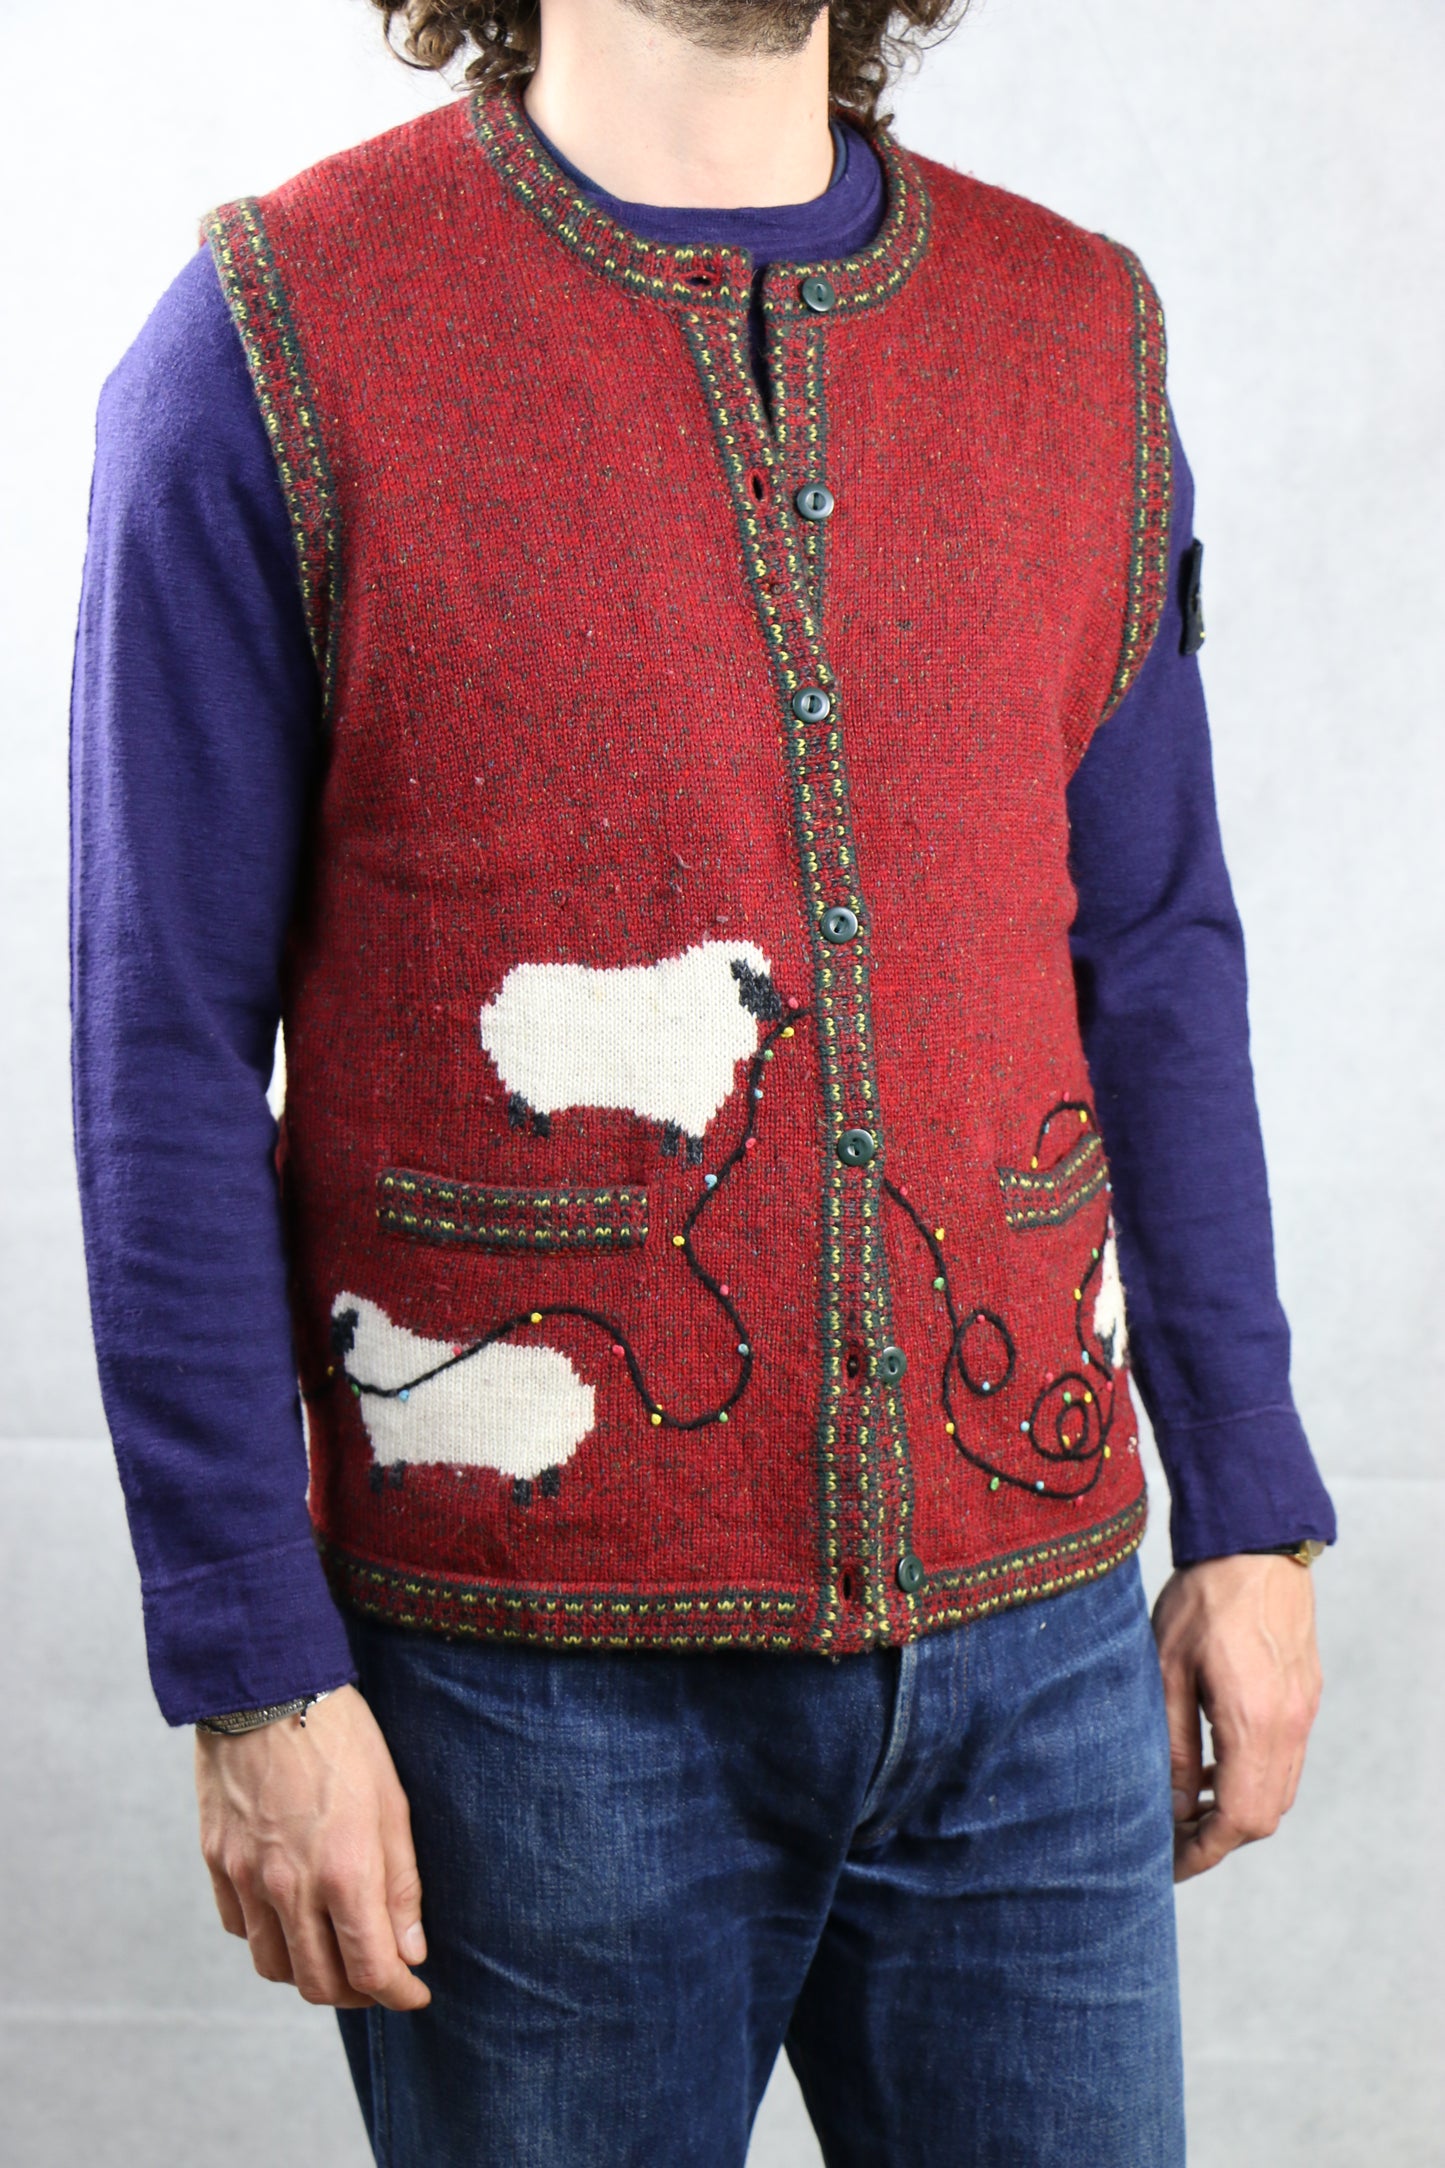 Woolrich Handmade Vest - vintage clothing clochard92.com